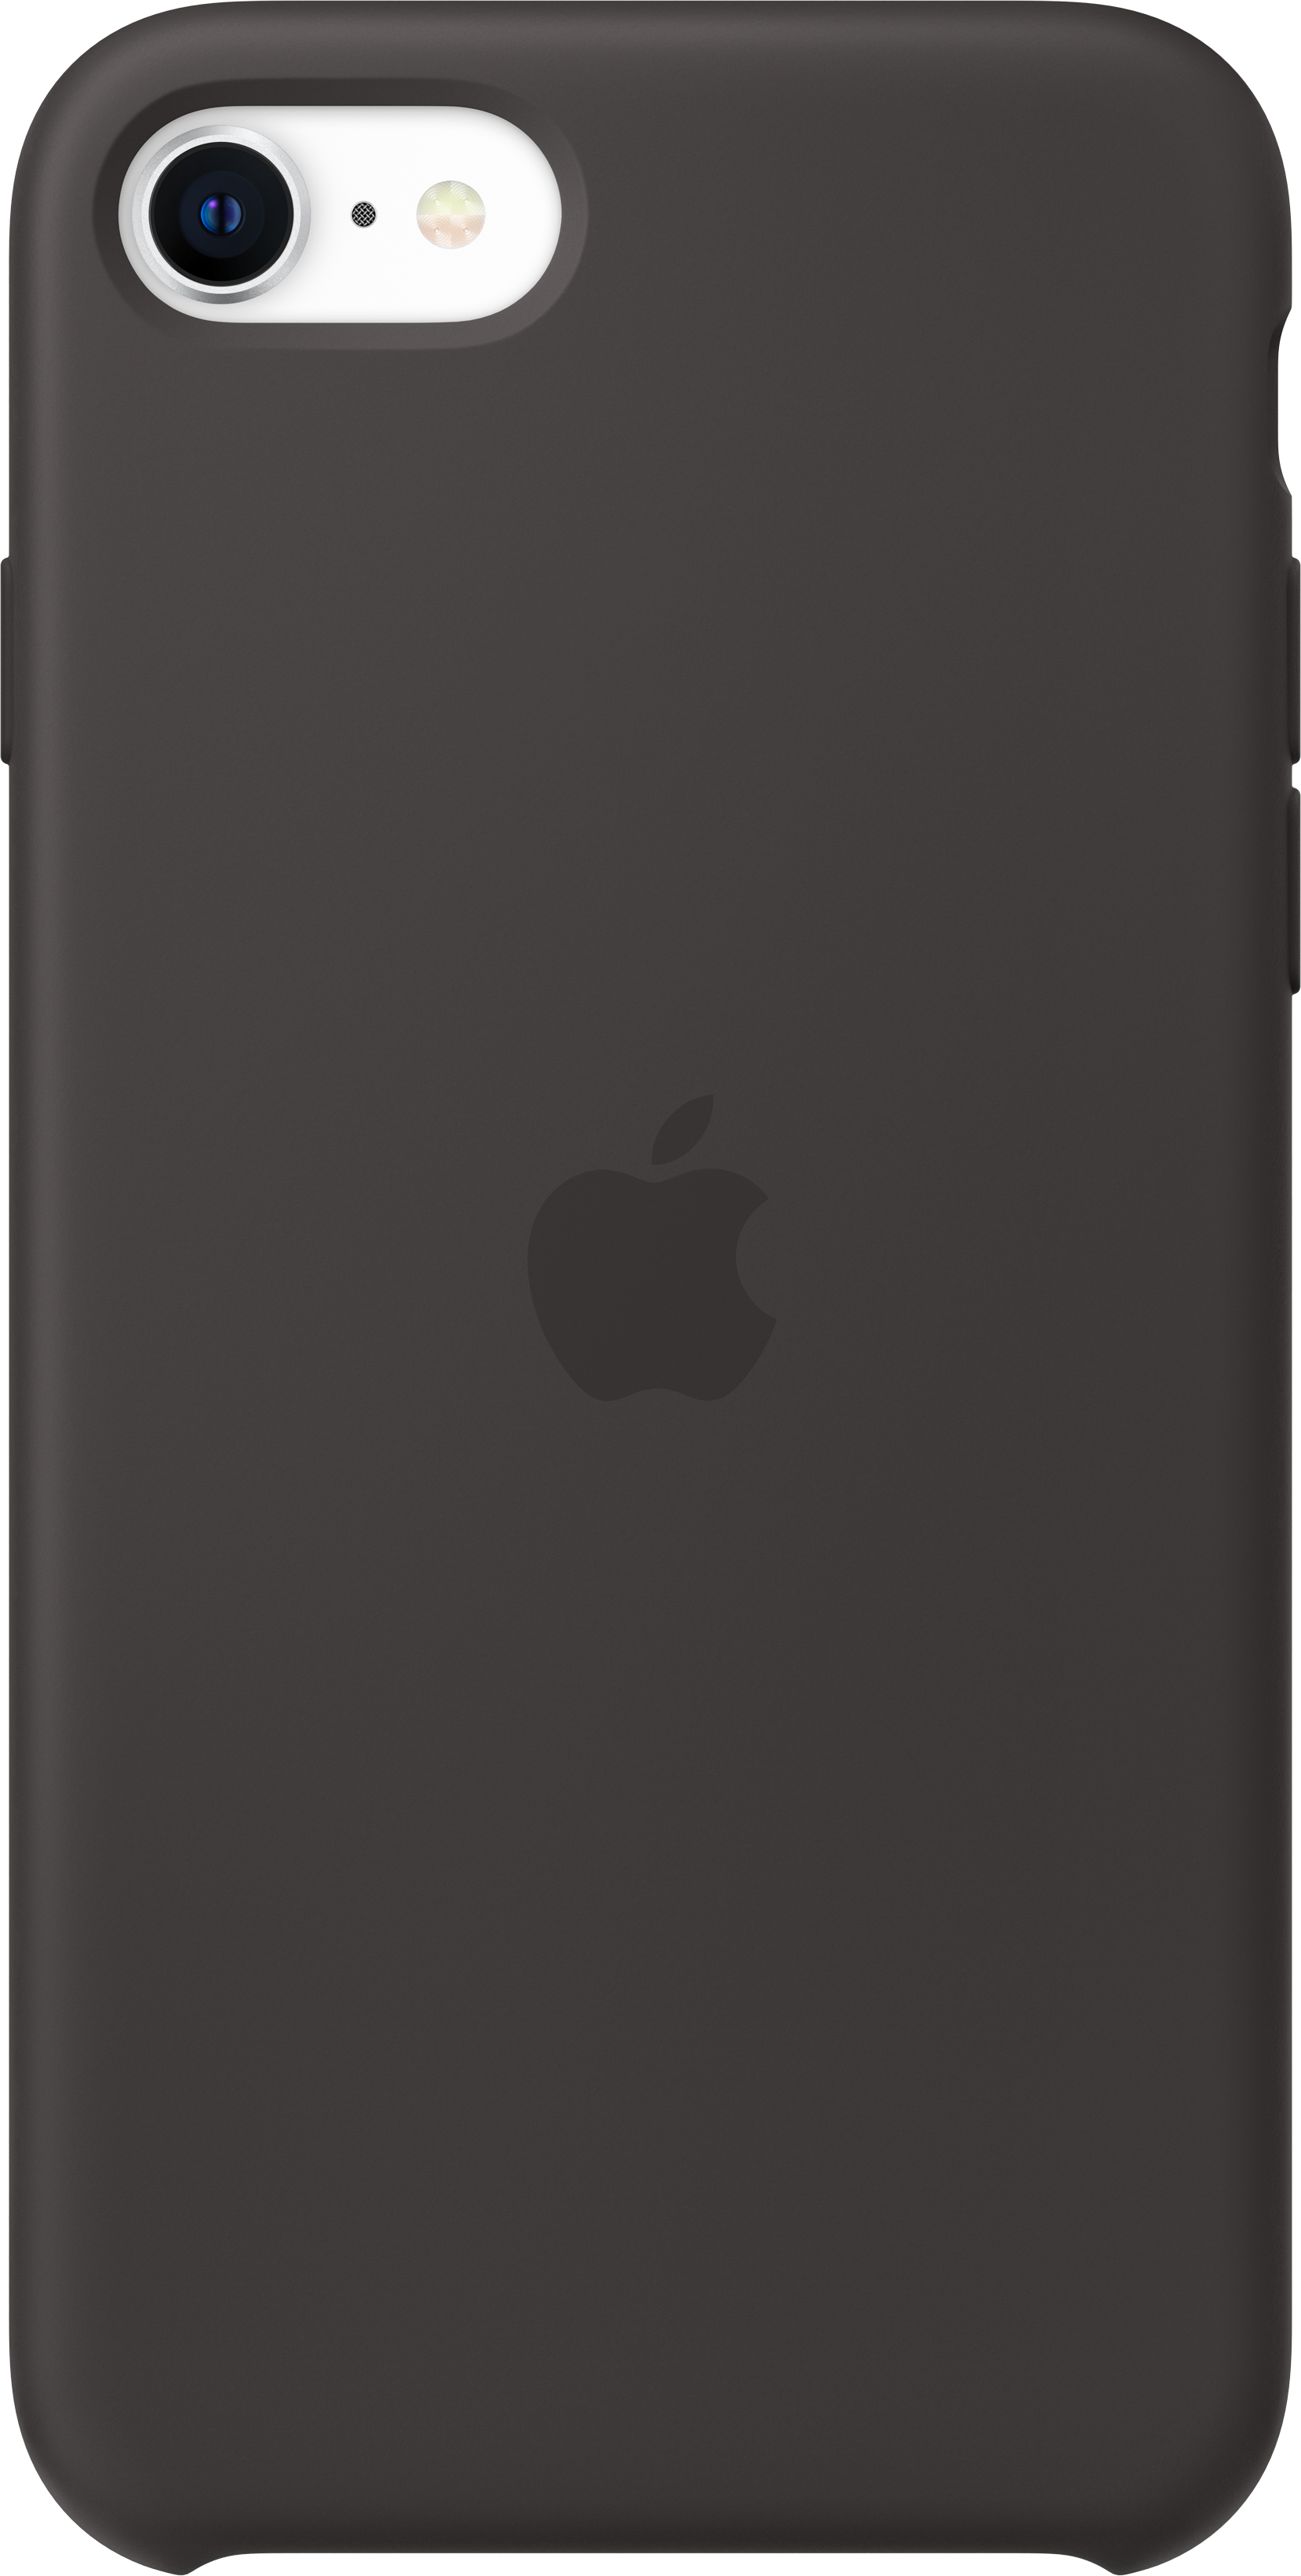 Apple iPhone SE Silicone Case - Midnight